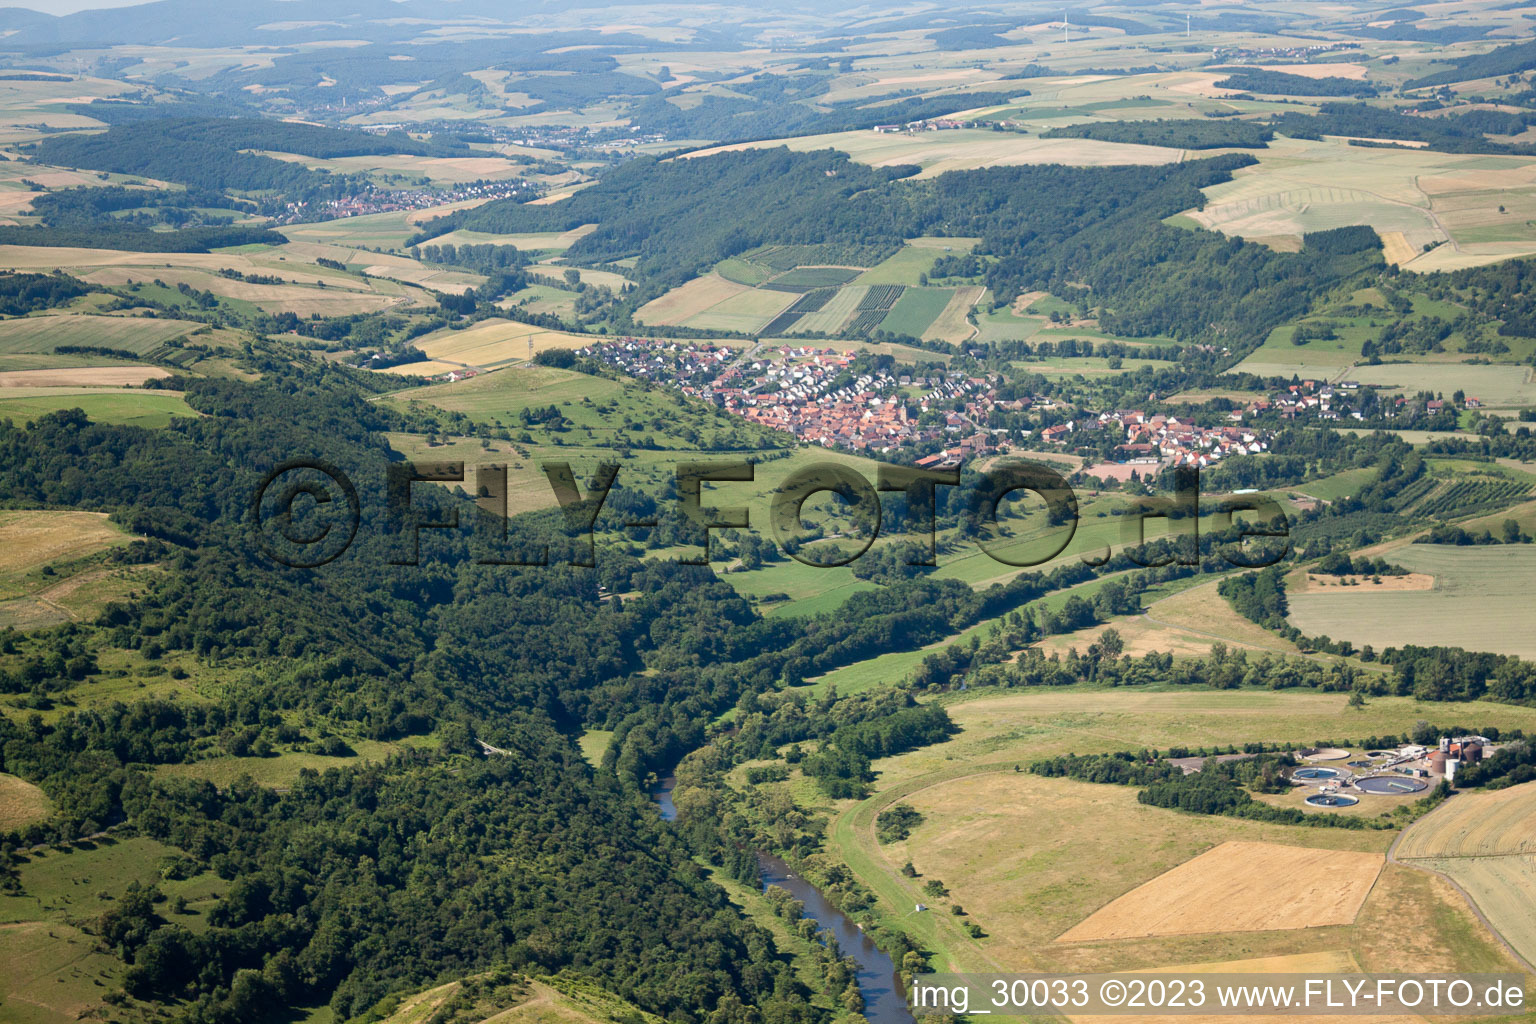 Aerial view of Niederhausen in the state Rhineland-Palatinate, Germany